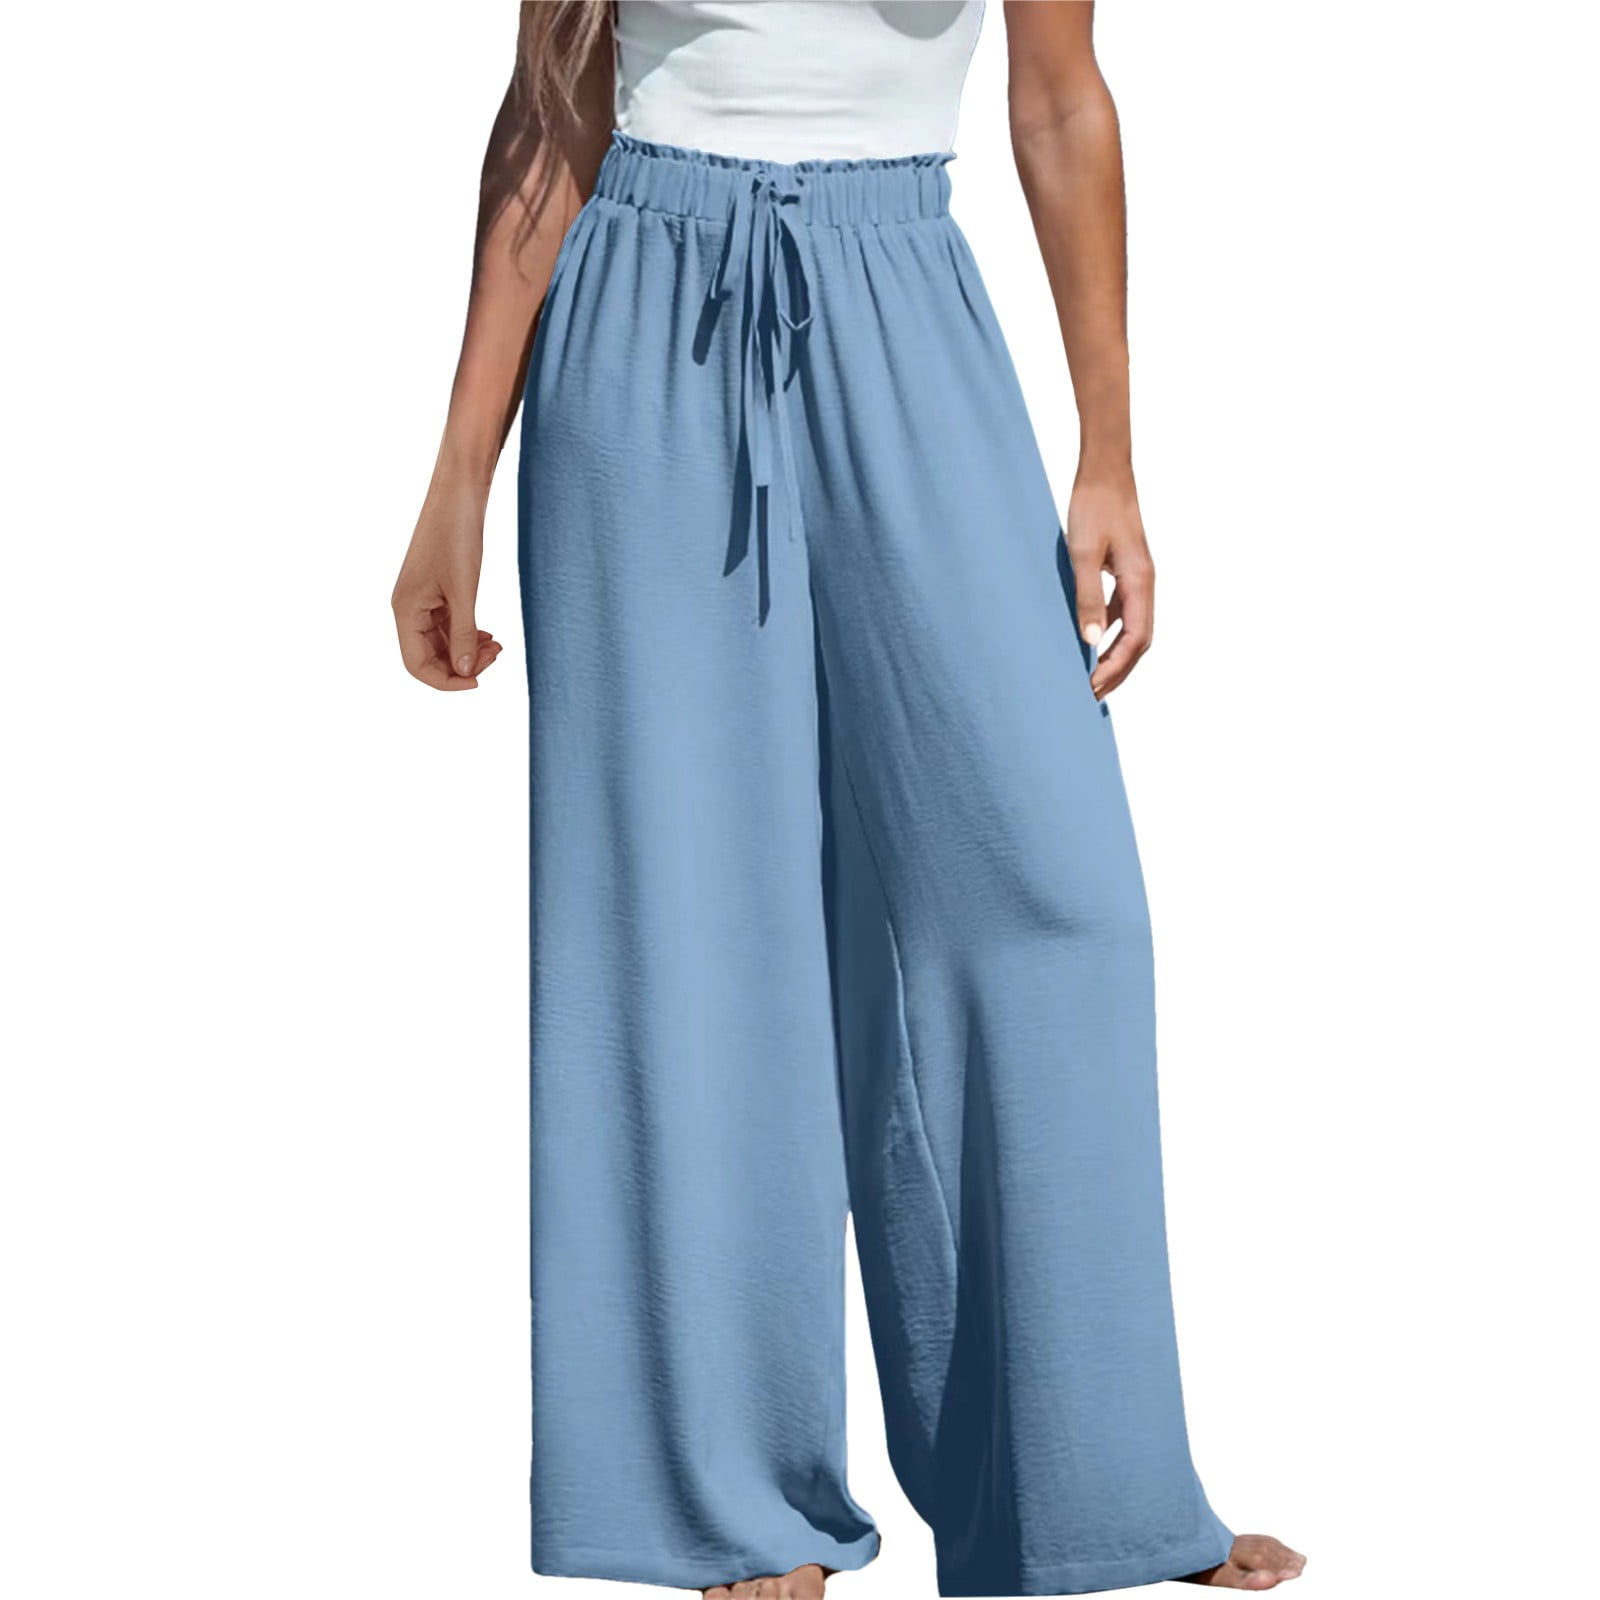 Ydojg Women Fashion Pants Pants Solid Elastic Waist Pant High Waist ...